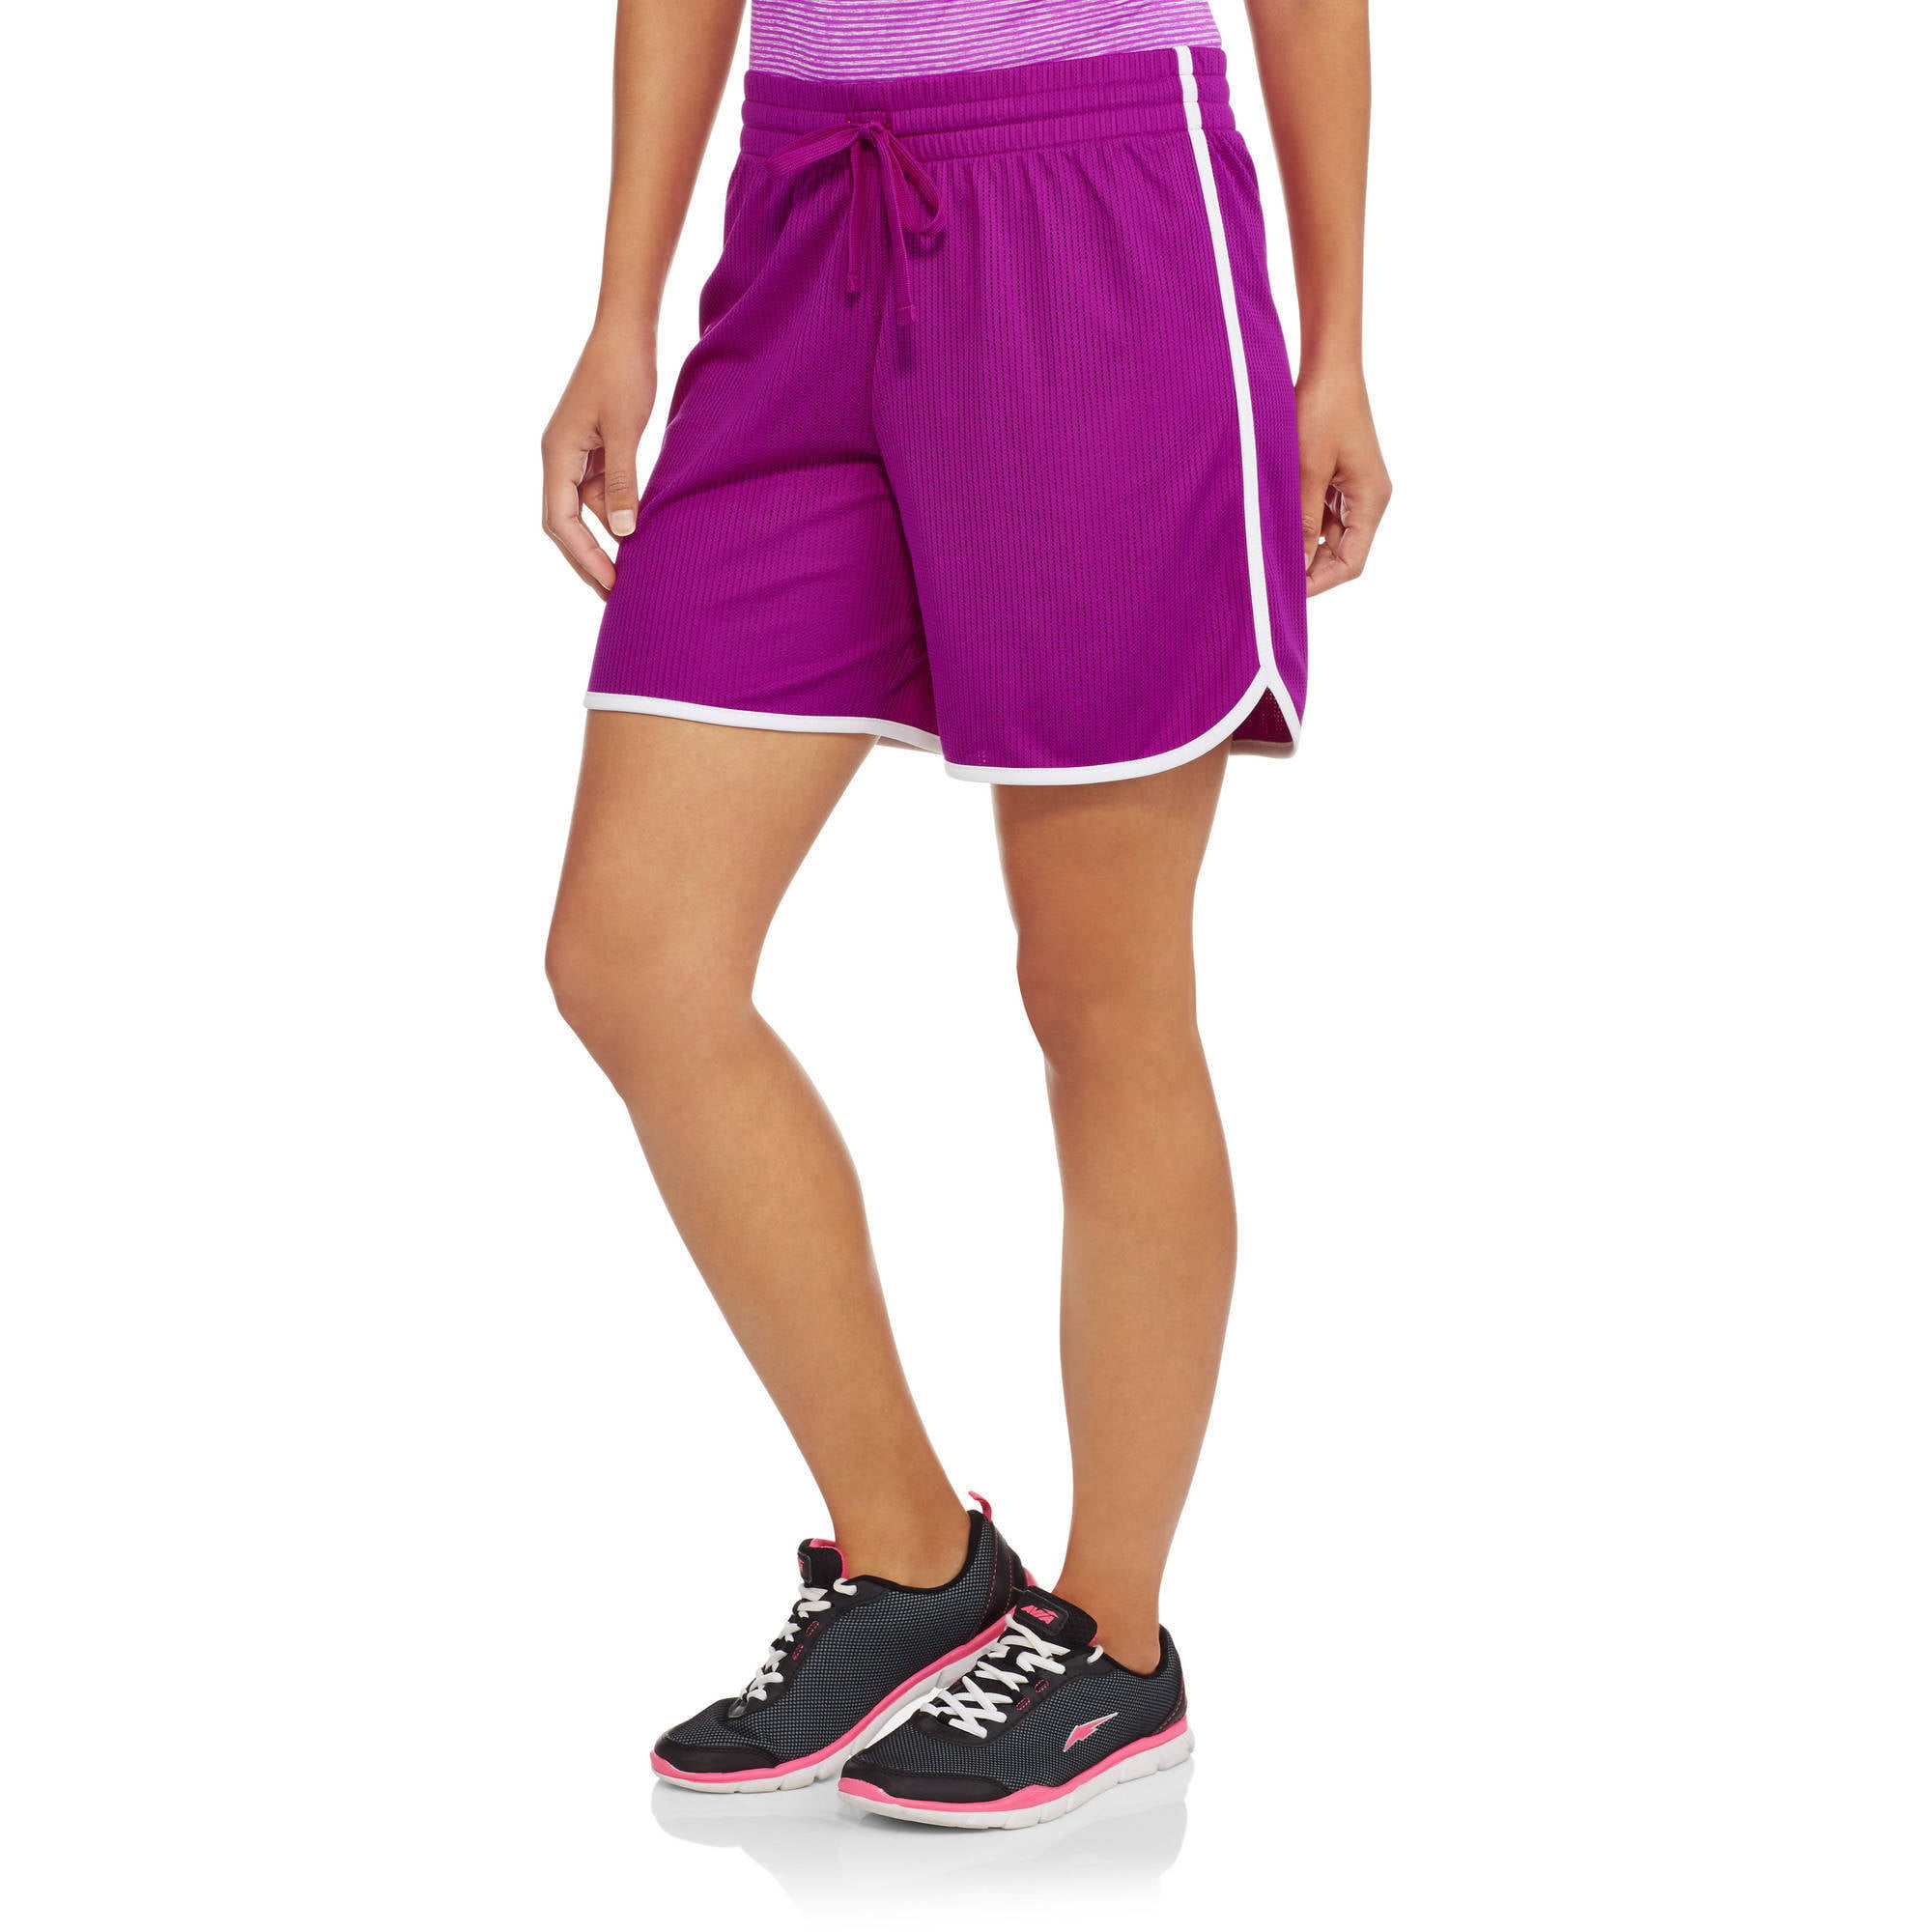 SHOPESSA Womens Athletic Shorts Elastic Waist Running Shorts Women Yoga Basketball Shorts for Teen Girls